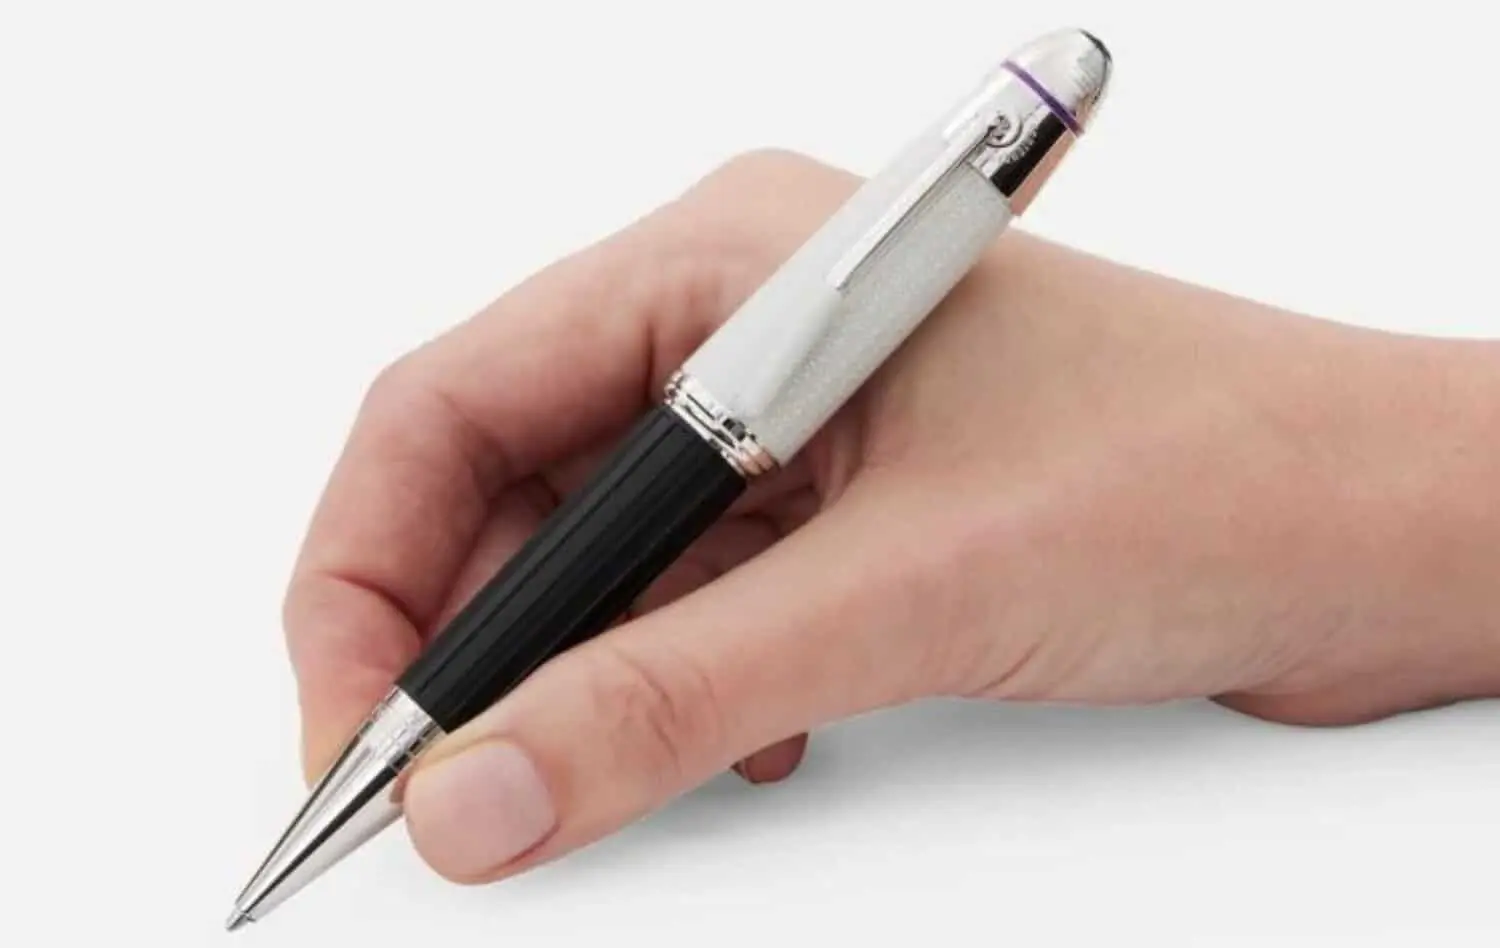 Montblanc ballpoint pen for precise writing